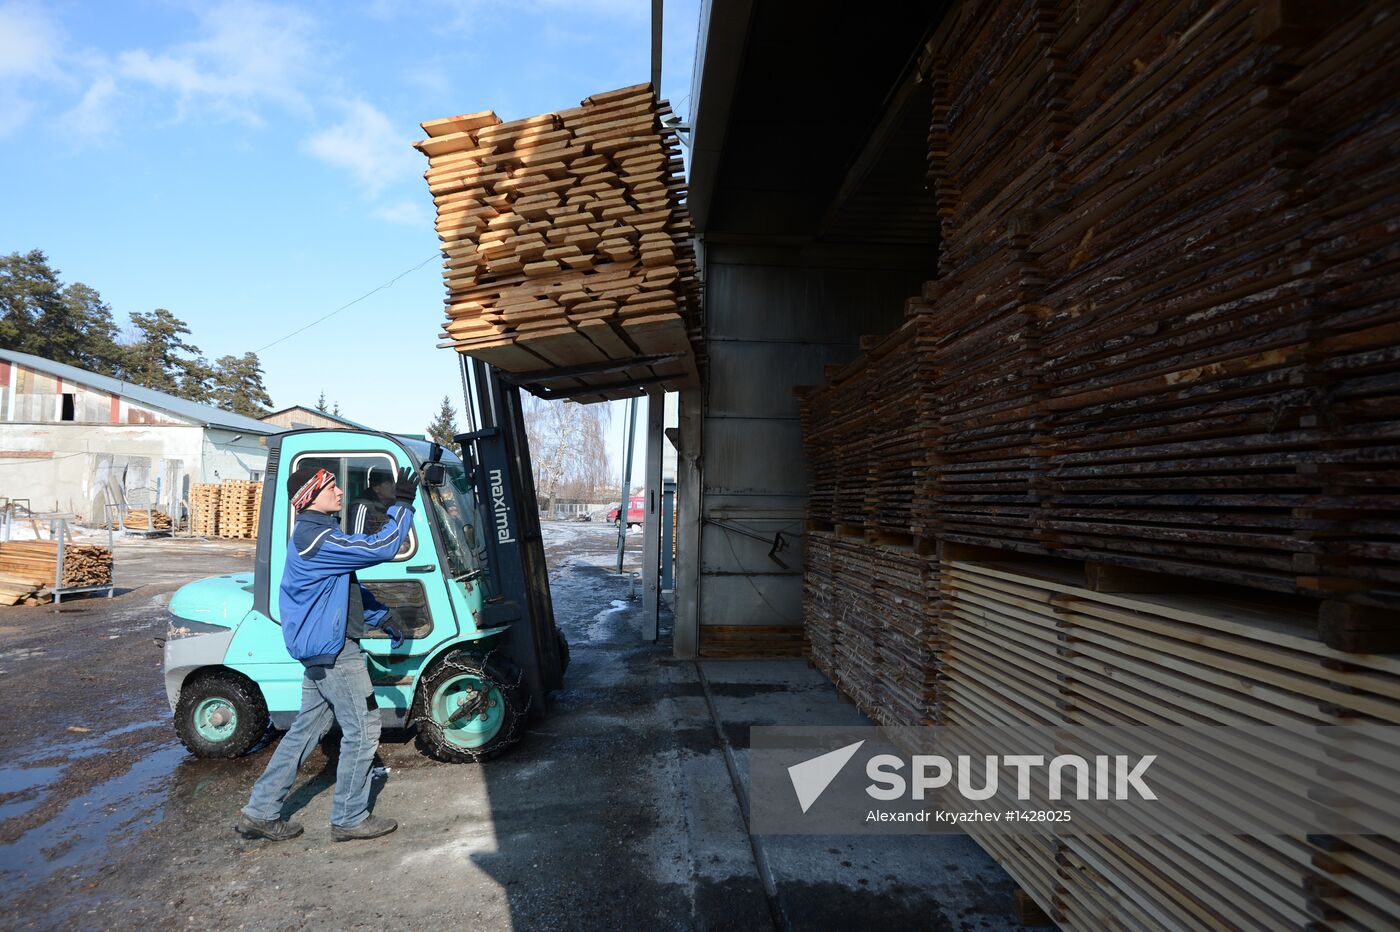 Logging in Novosibirsk region